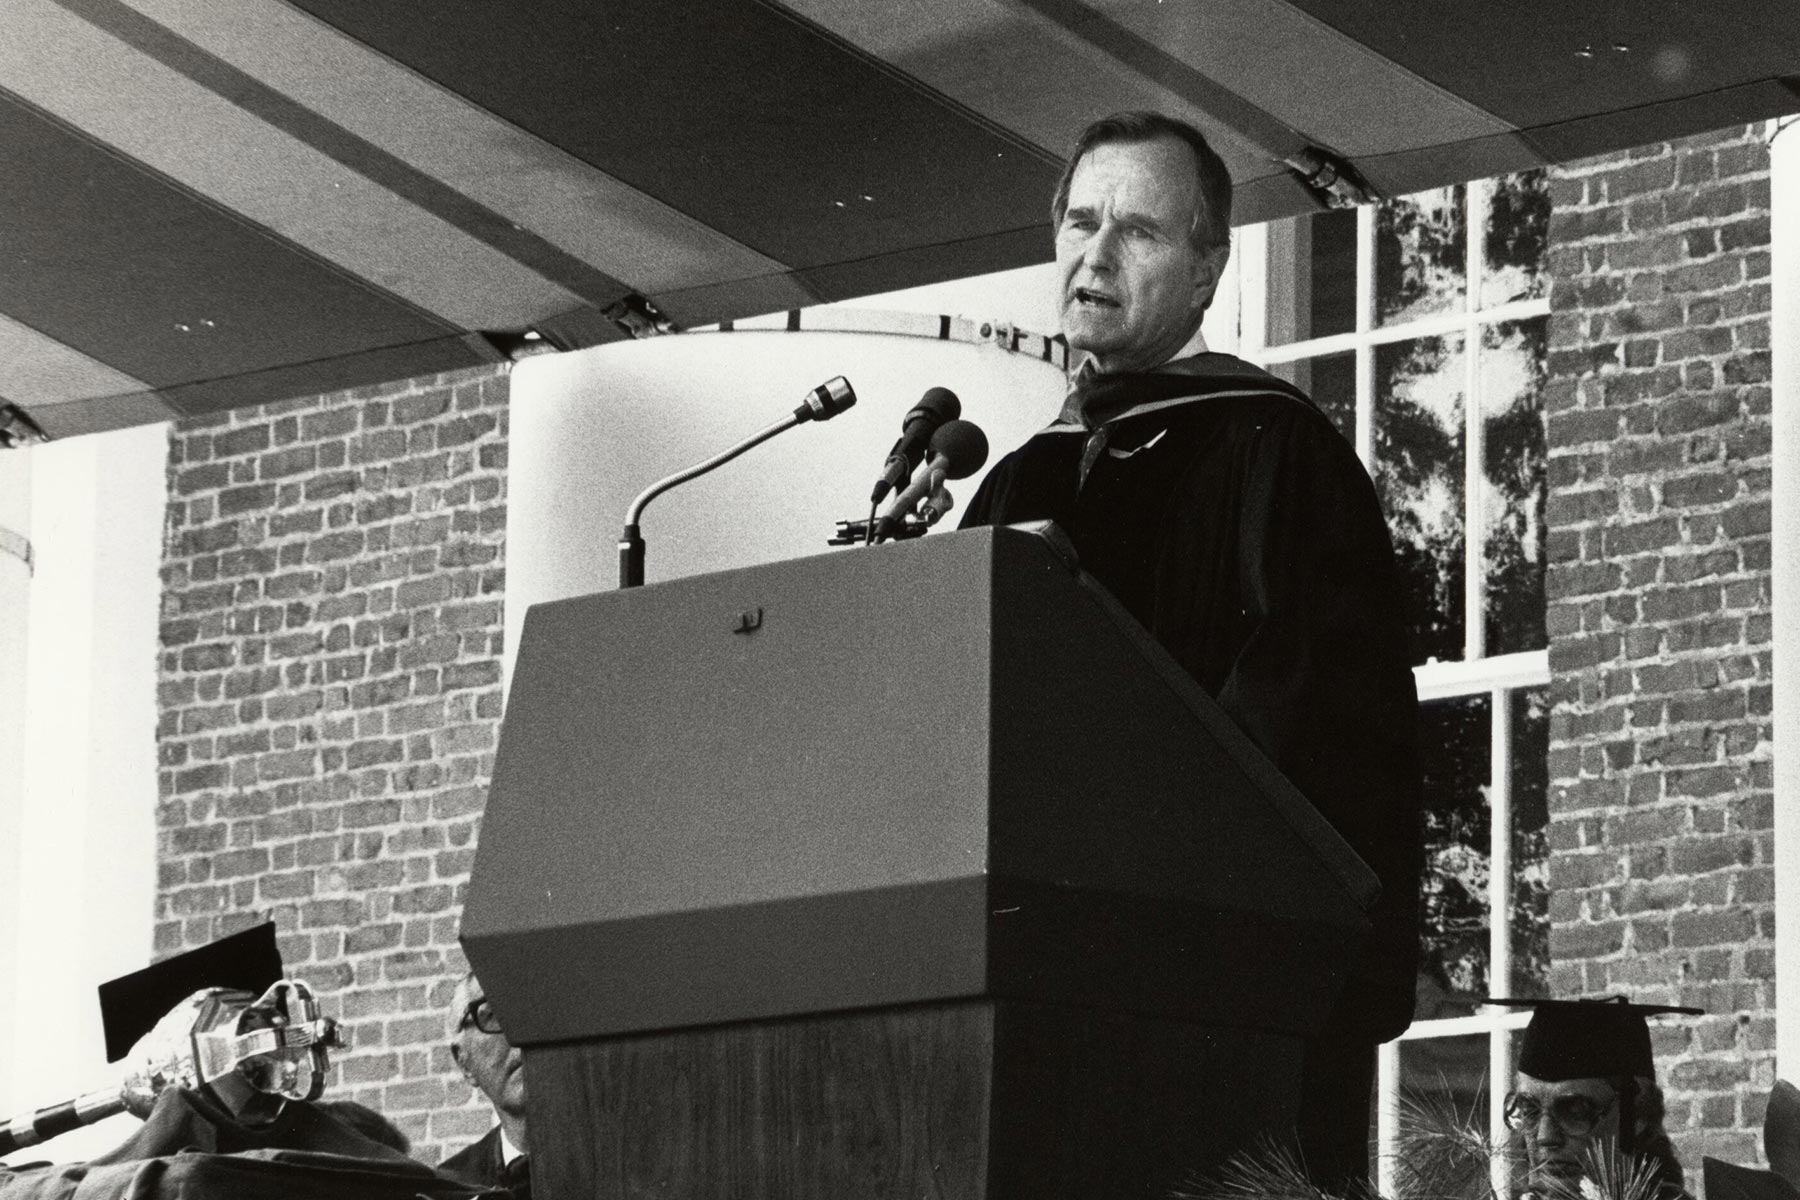 George H.W. Bush speaking at a podium during a UVA graduation